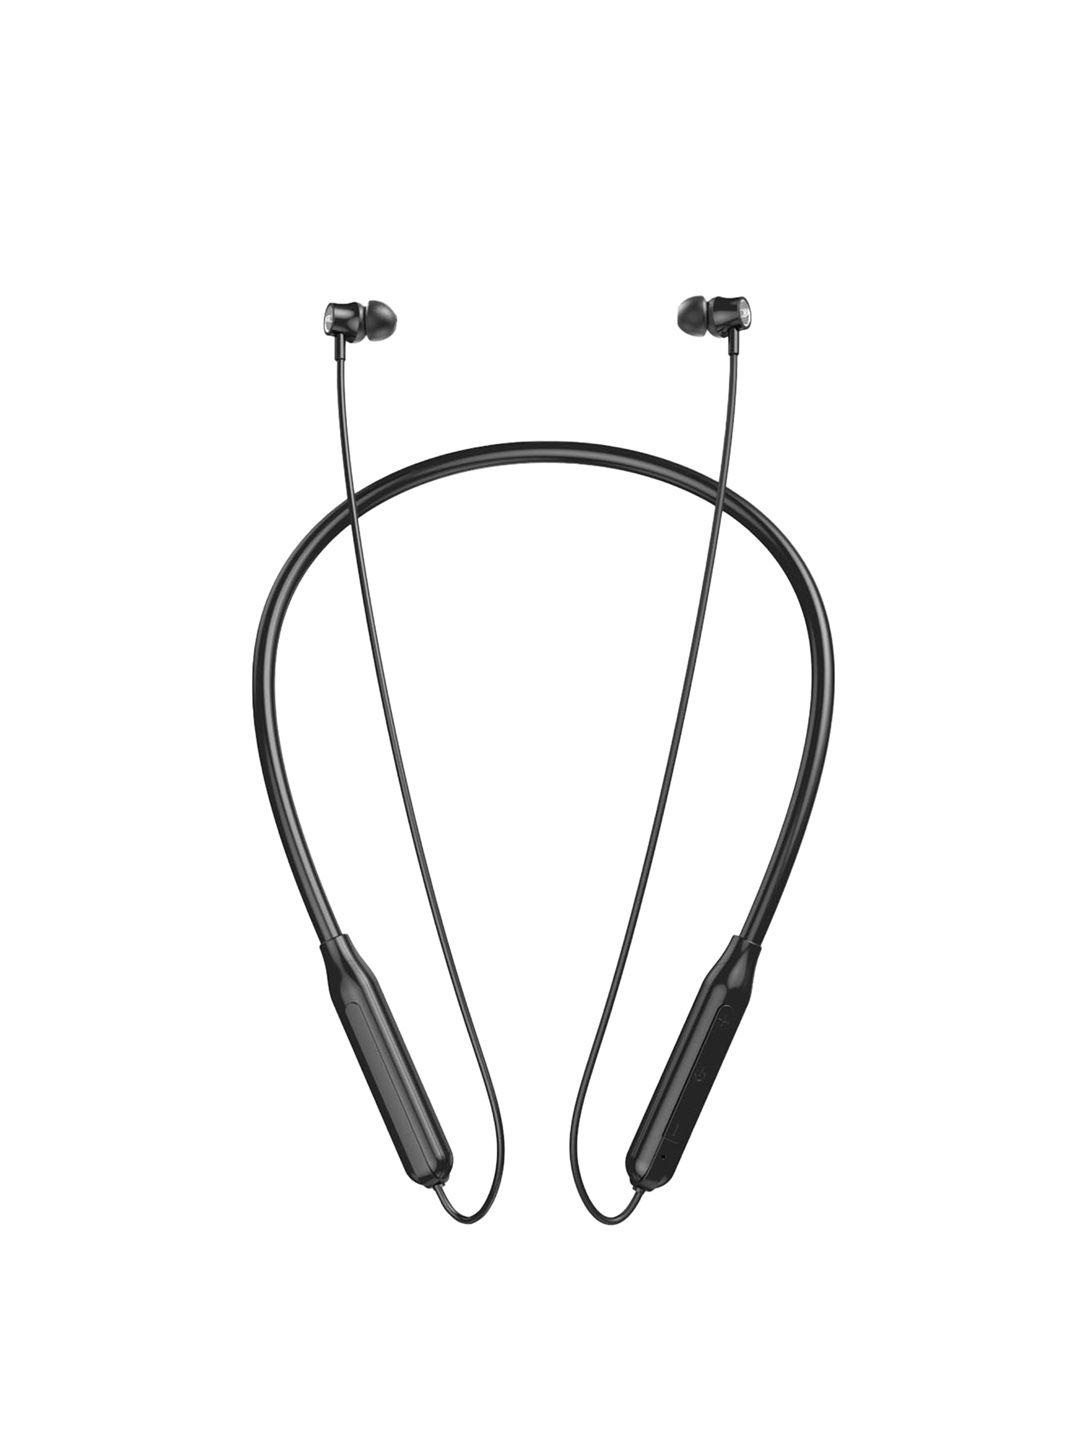 cellecor black solid nk-3 wireless bluetooth earphone neckband